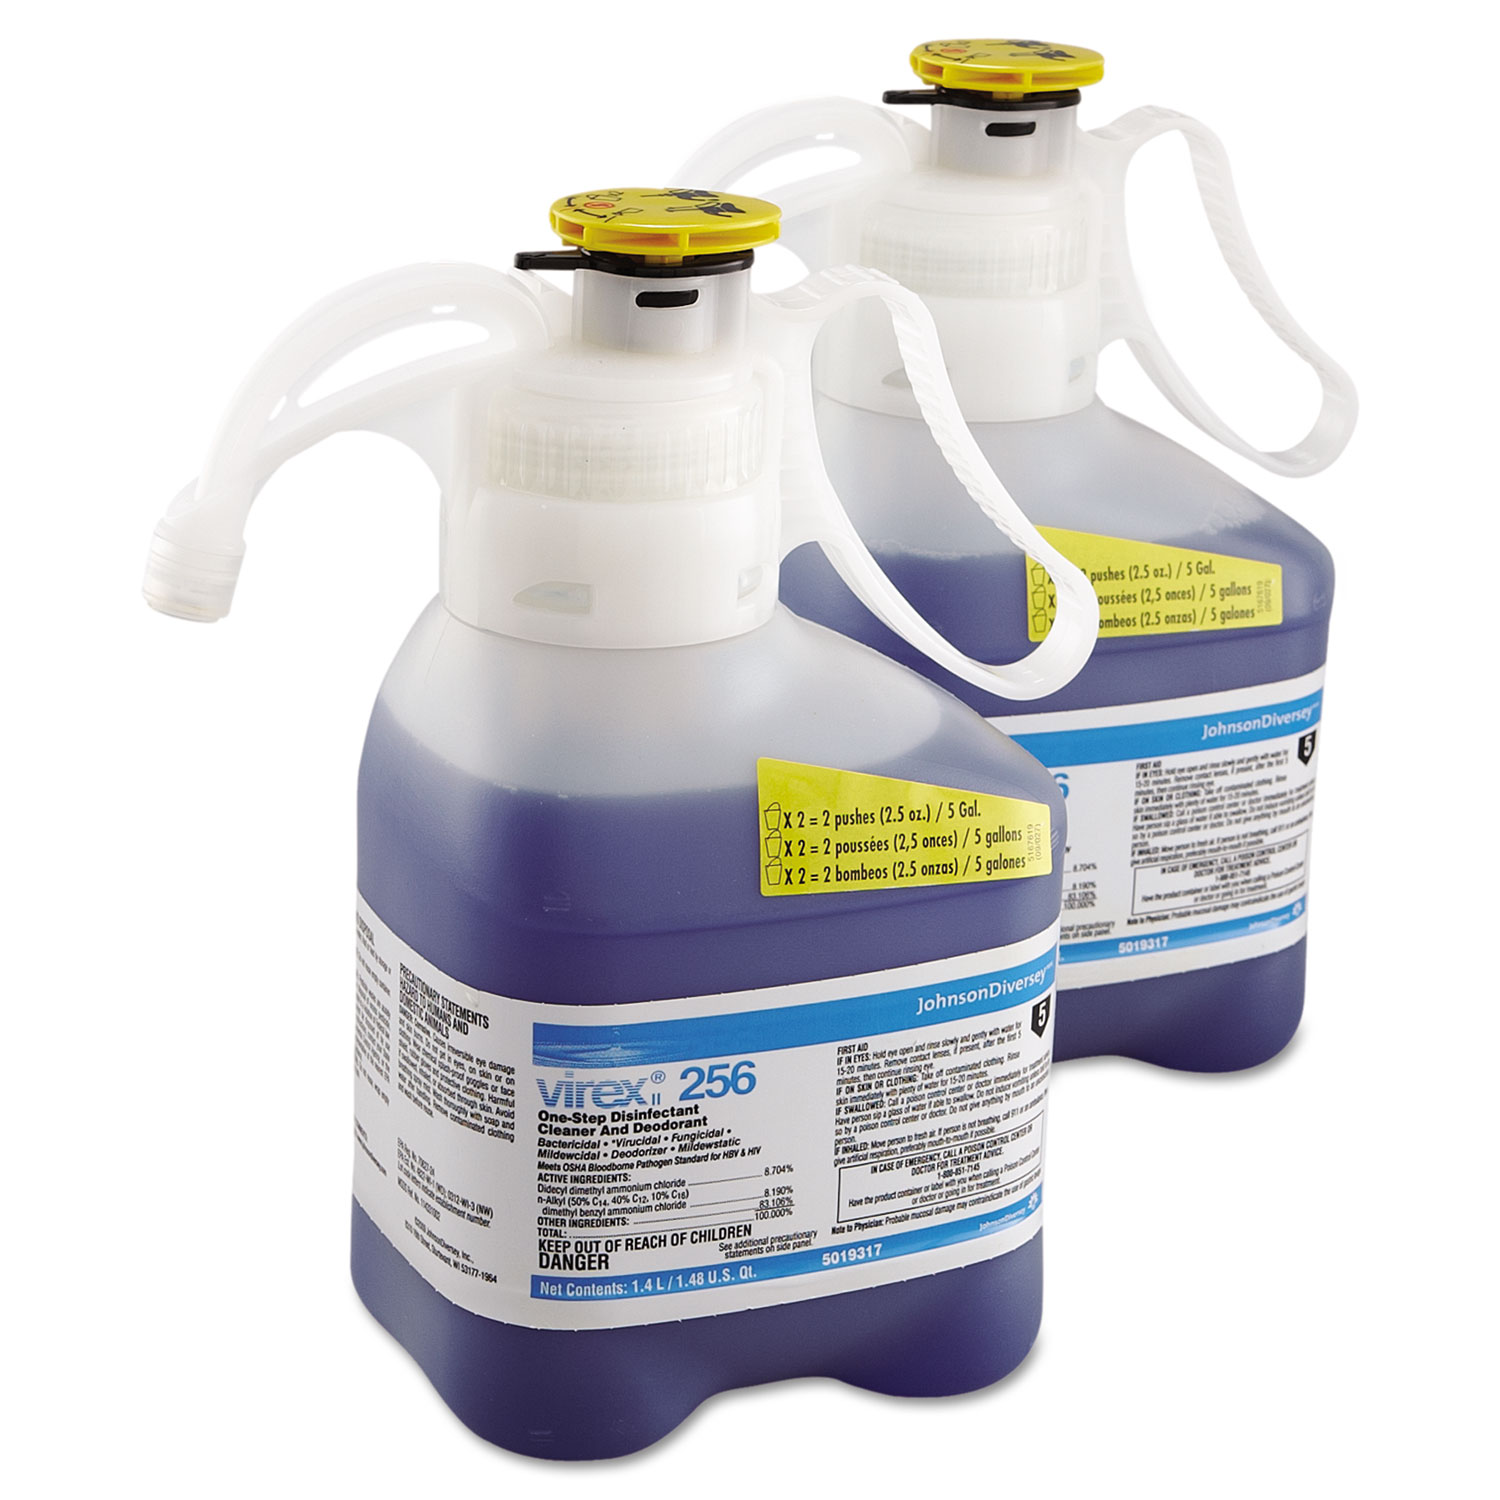  Diversey 5019317 Virex II 256 One-Step Disinfectant Cleaner Deodorant, Mint, 1.4L, 2 Bottles/CT (DVO5019317) 